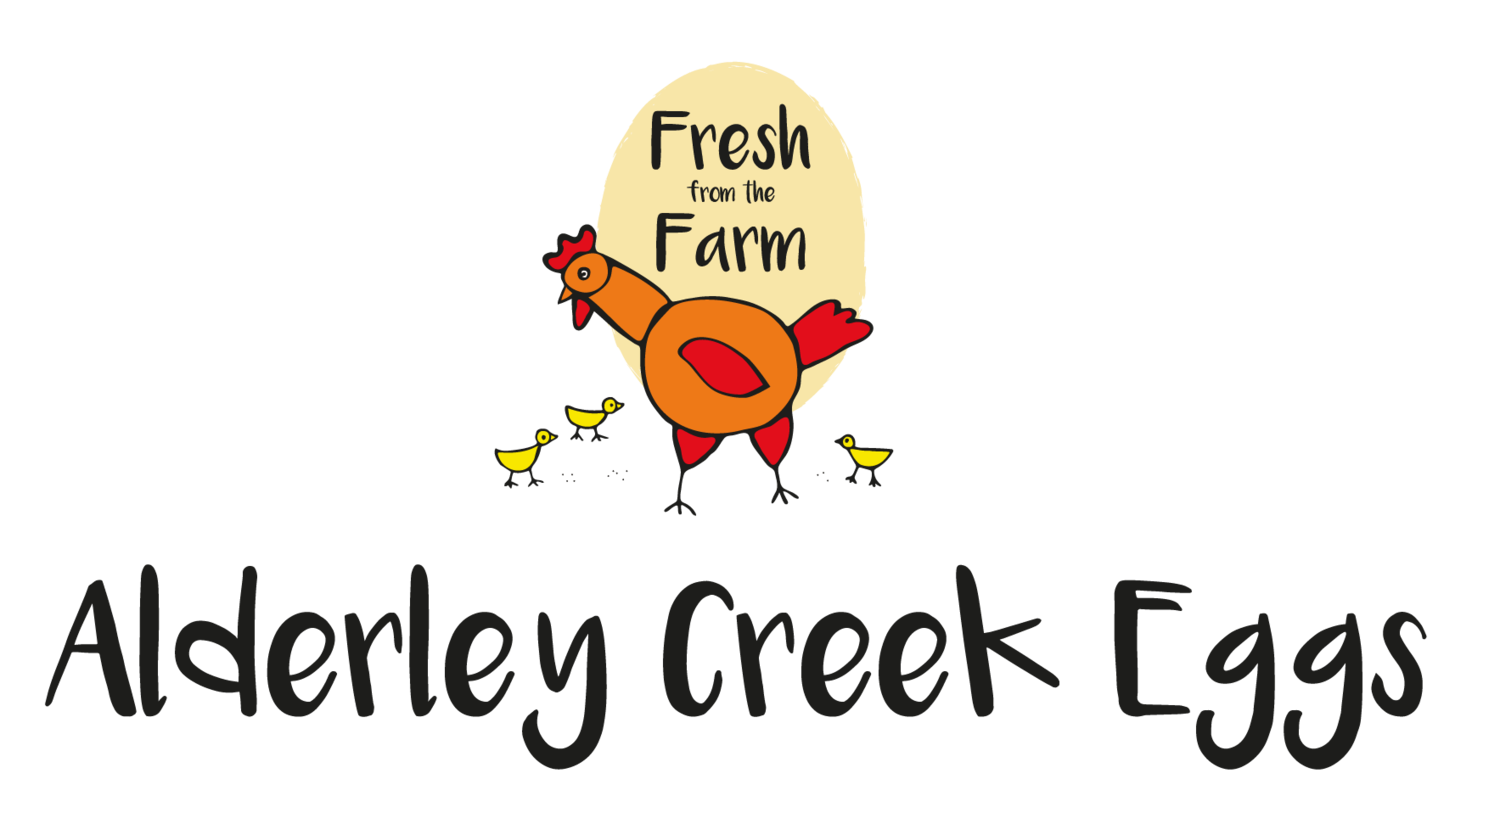 Alderley Creek Eggs